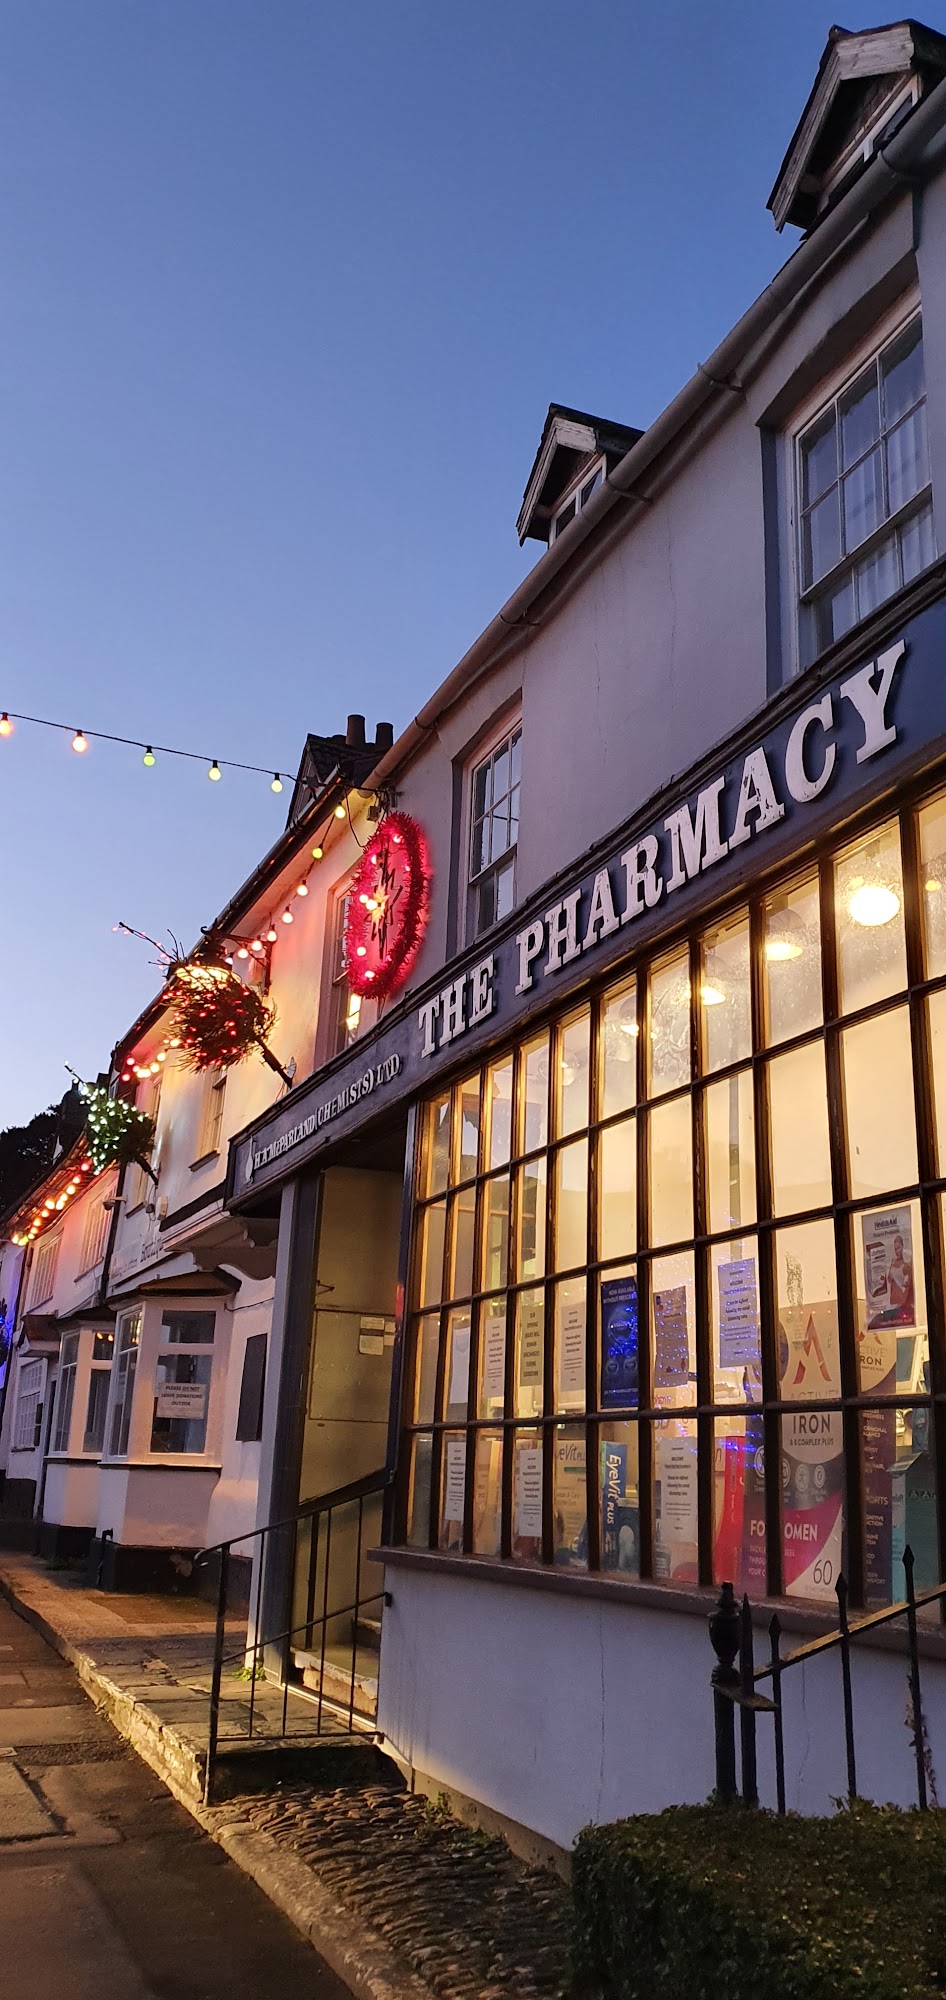 Highworth Pharmacy